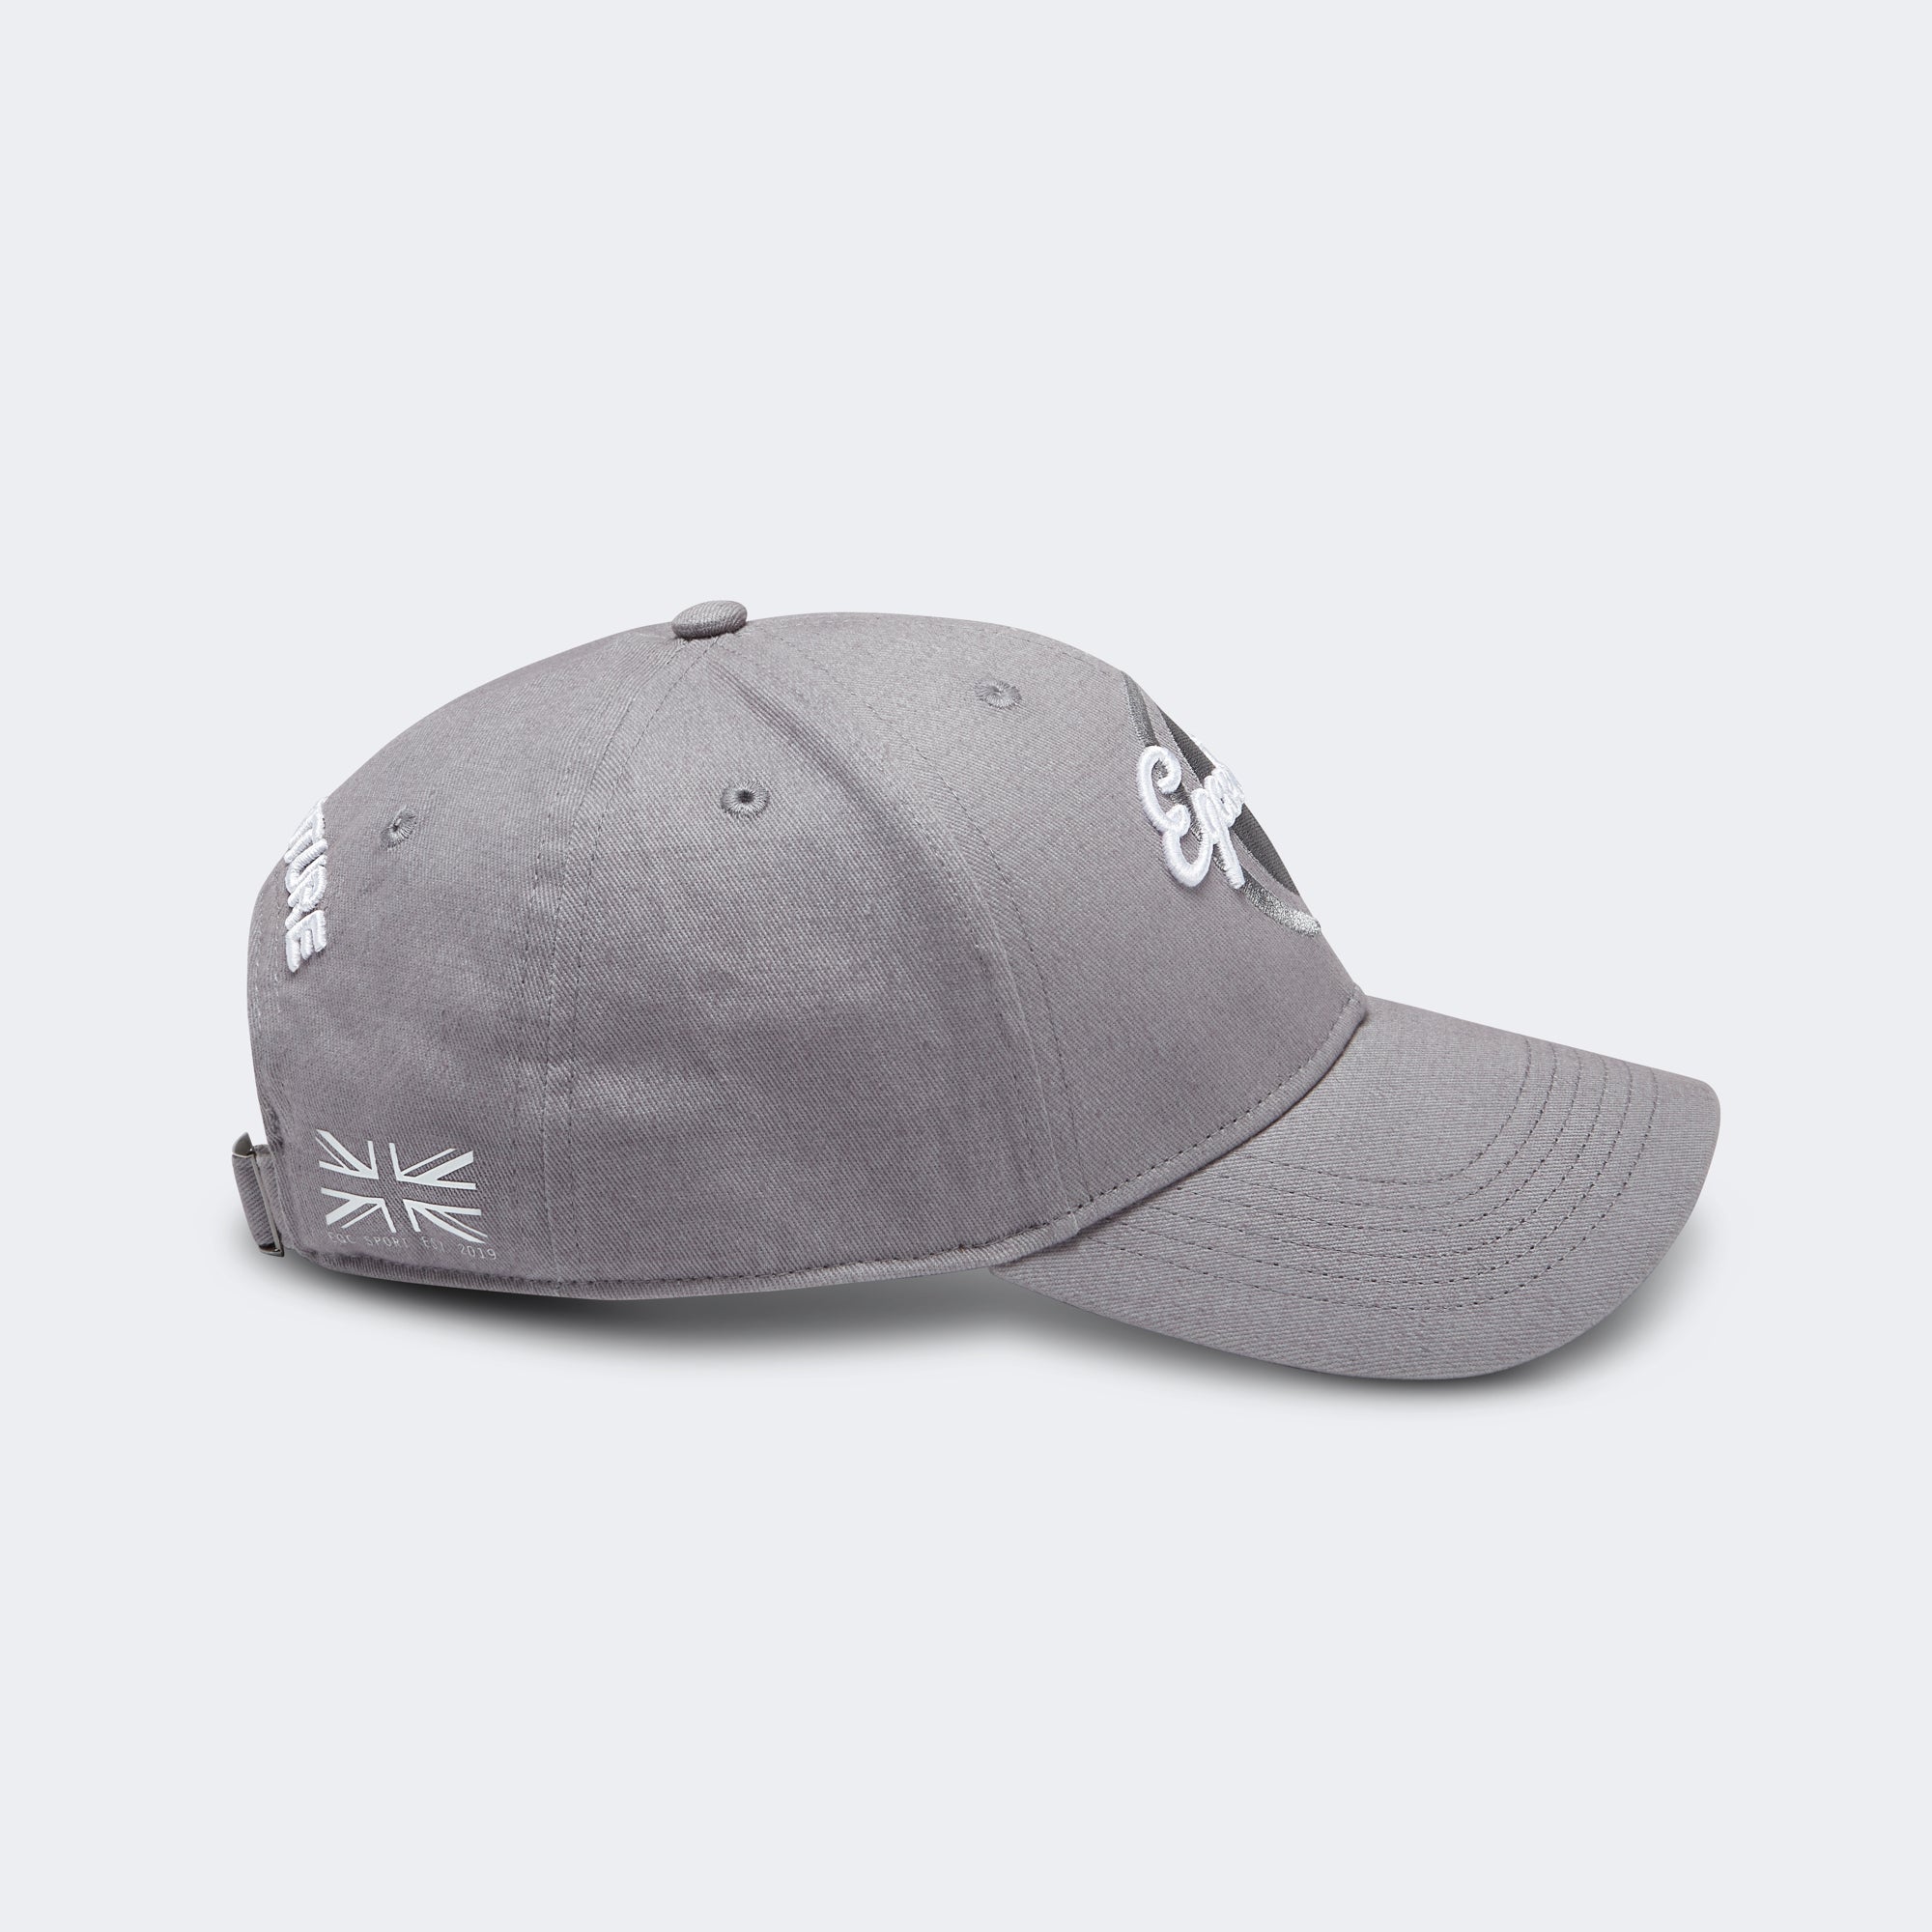 Exclusive Cap / Hat 'Esporte' - Grey